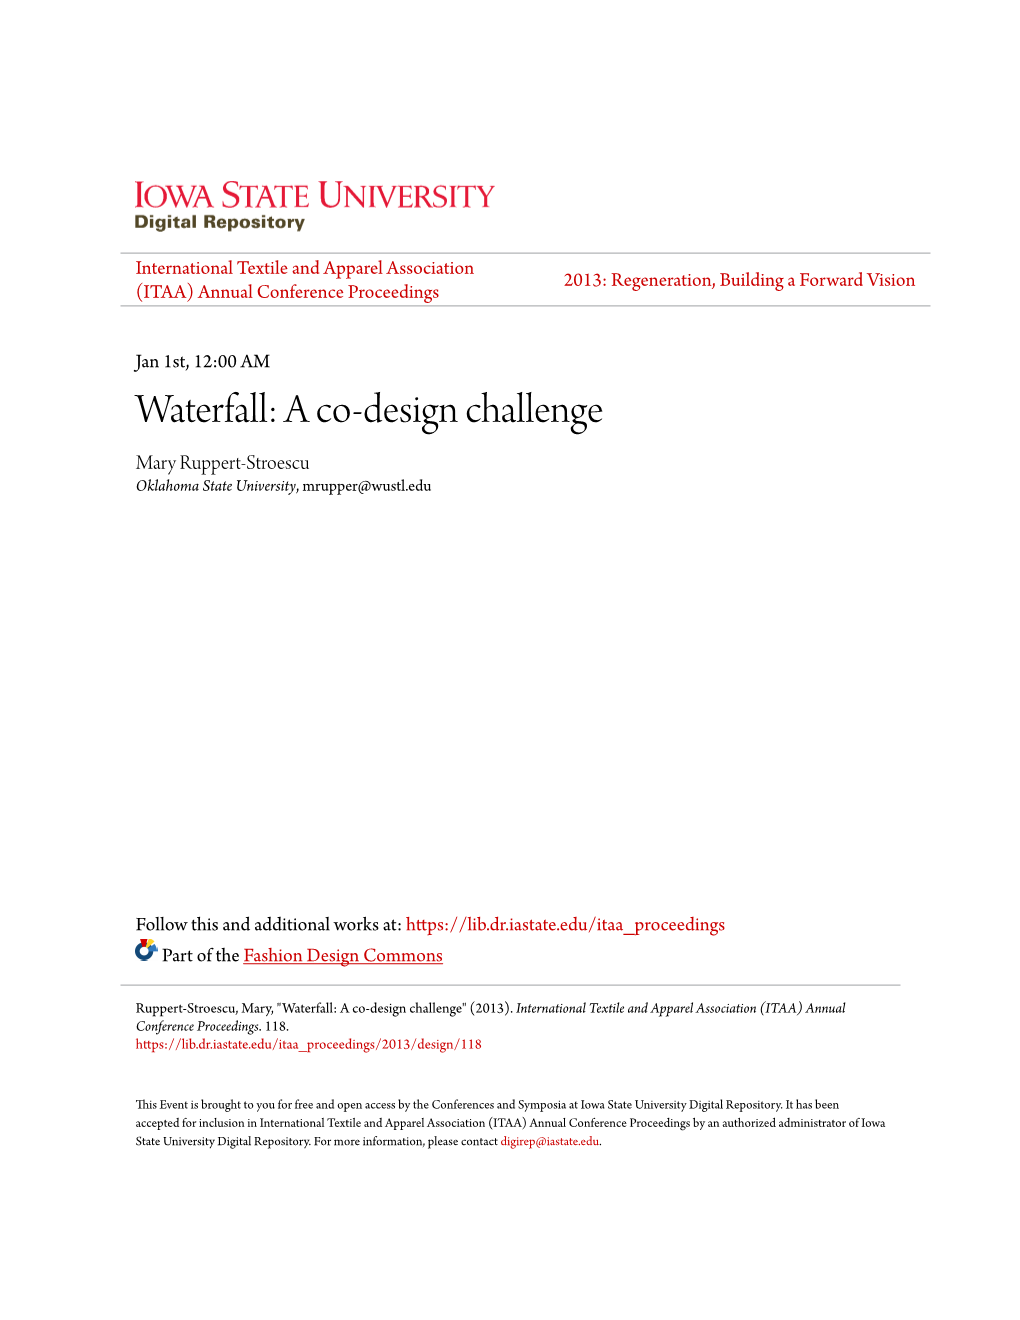 Waterfall: a Co-Design Challenge Mary Ruppert-Stroescu Oklahoma State University, Mrupper@Wustl.Edu